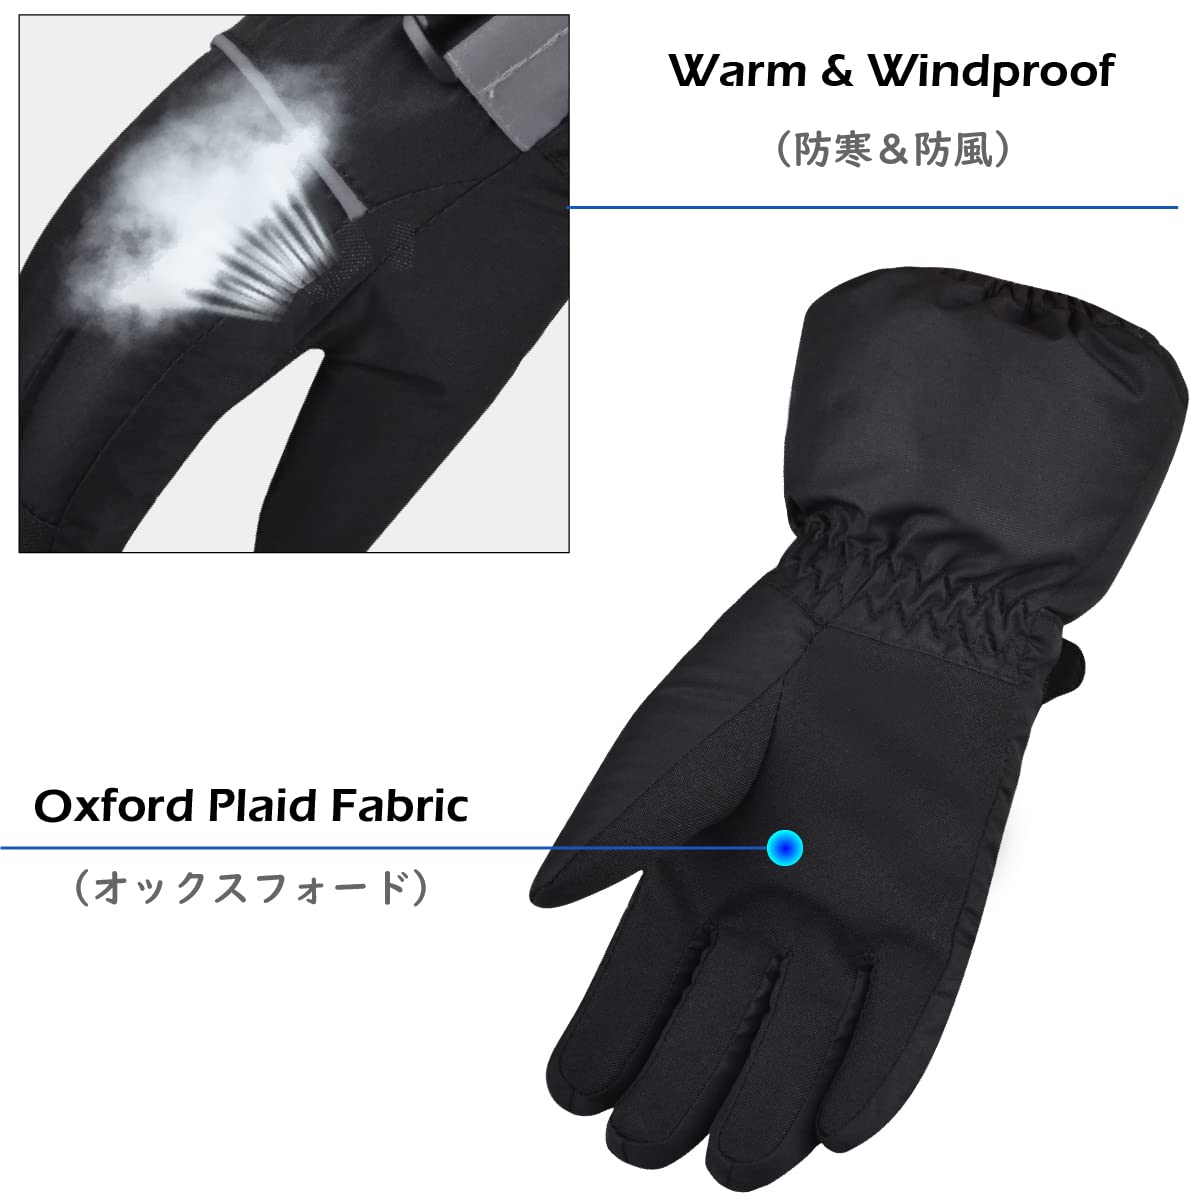 TRIWONDER Children's Ski Gloves Warm Winter Snow Gloves Snowboard Gloves Heated Windproof for Boys Girls Hiking Cycling